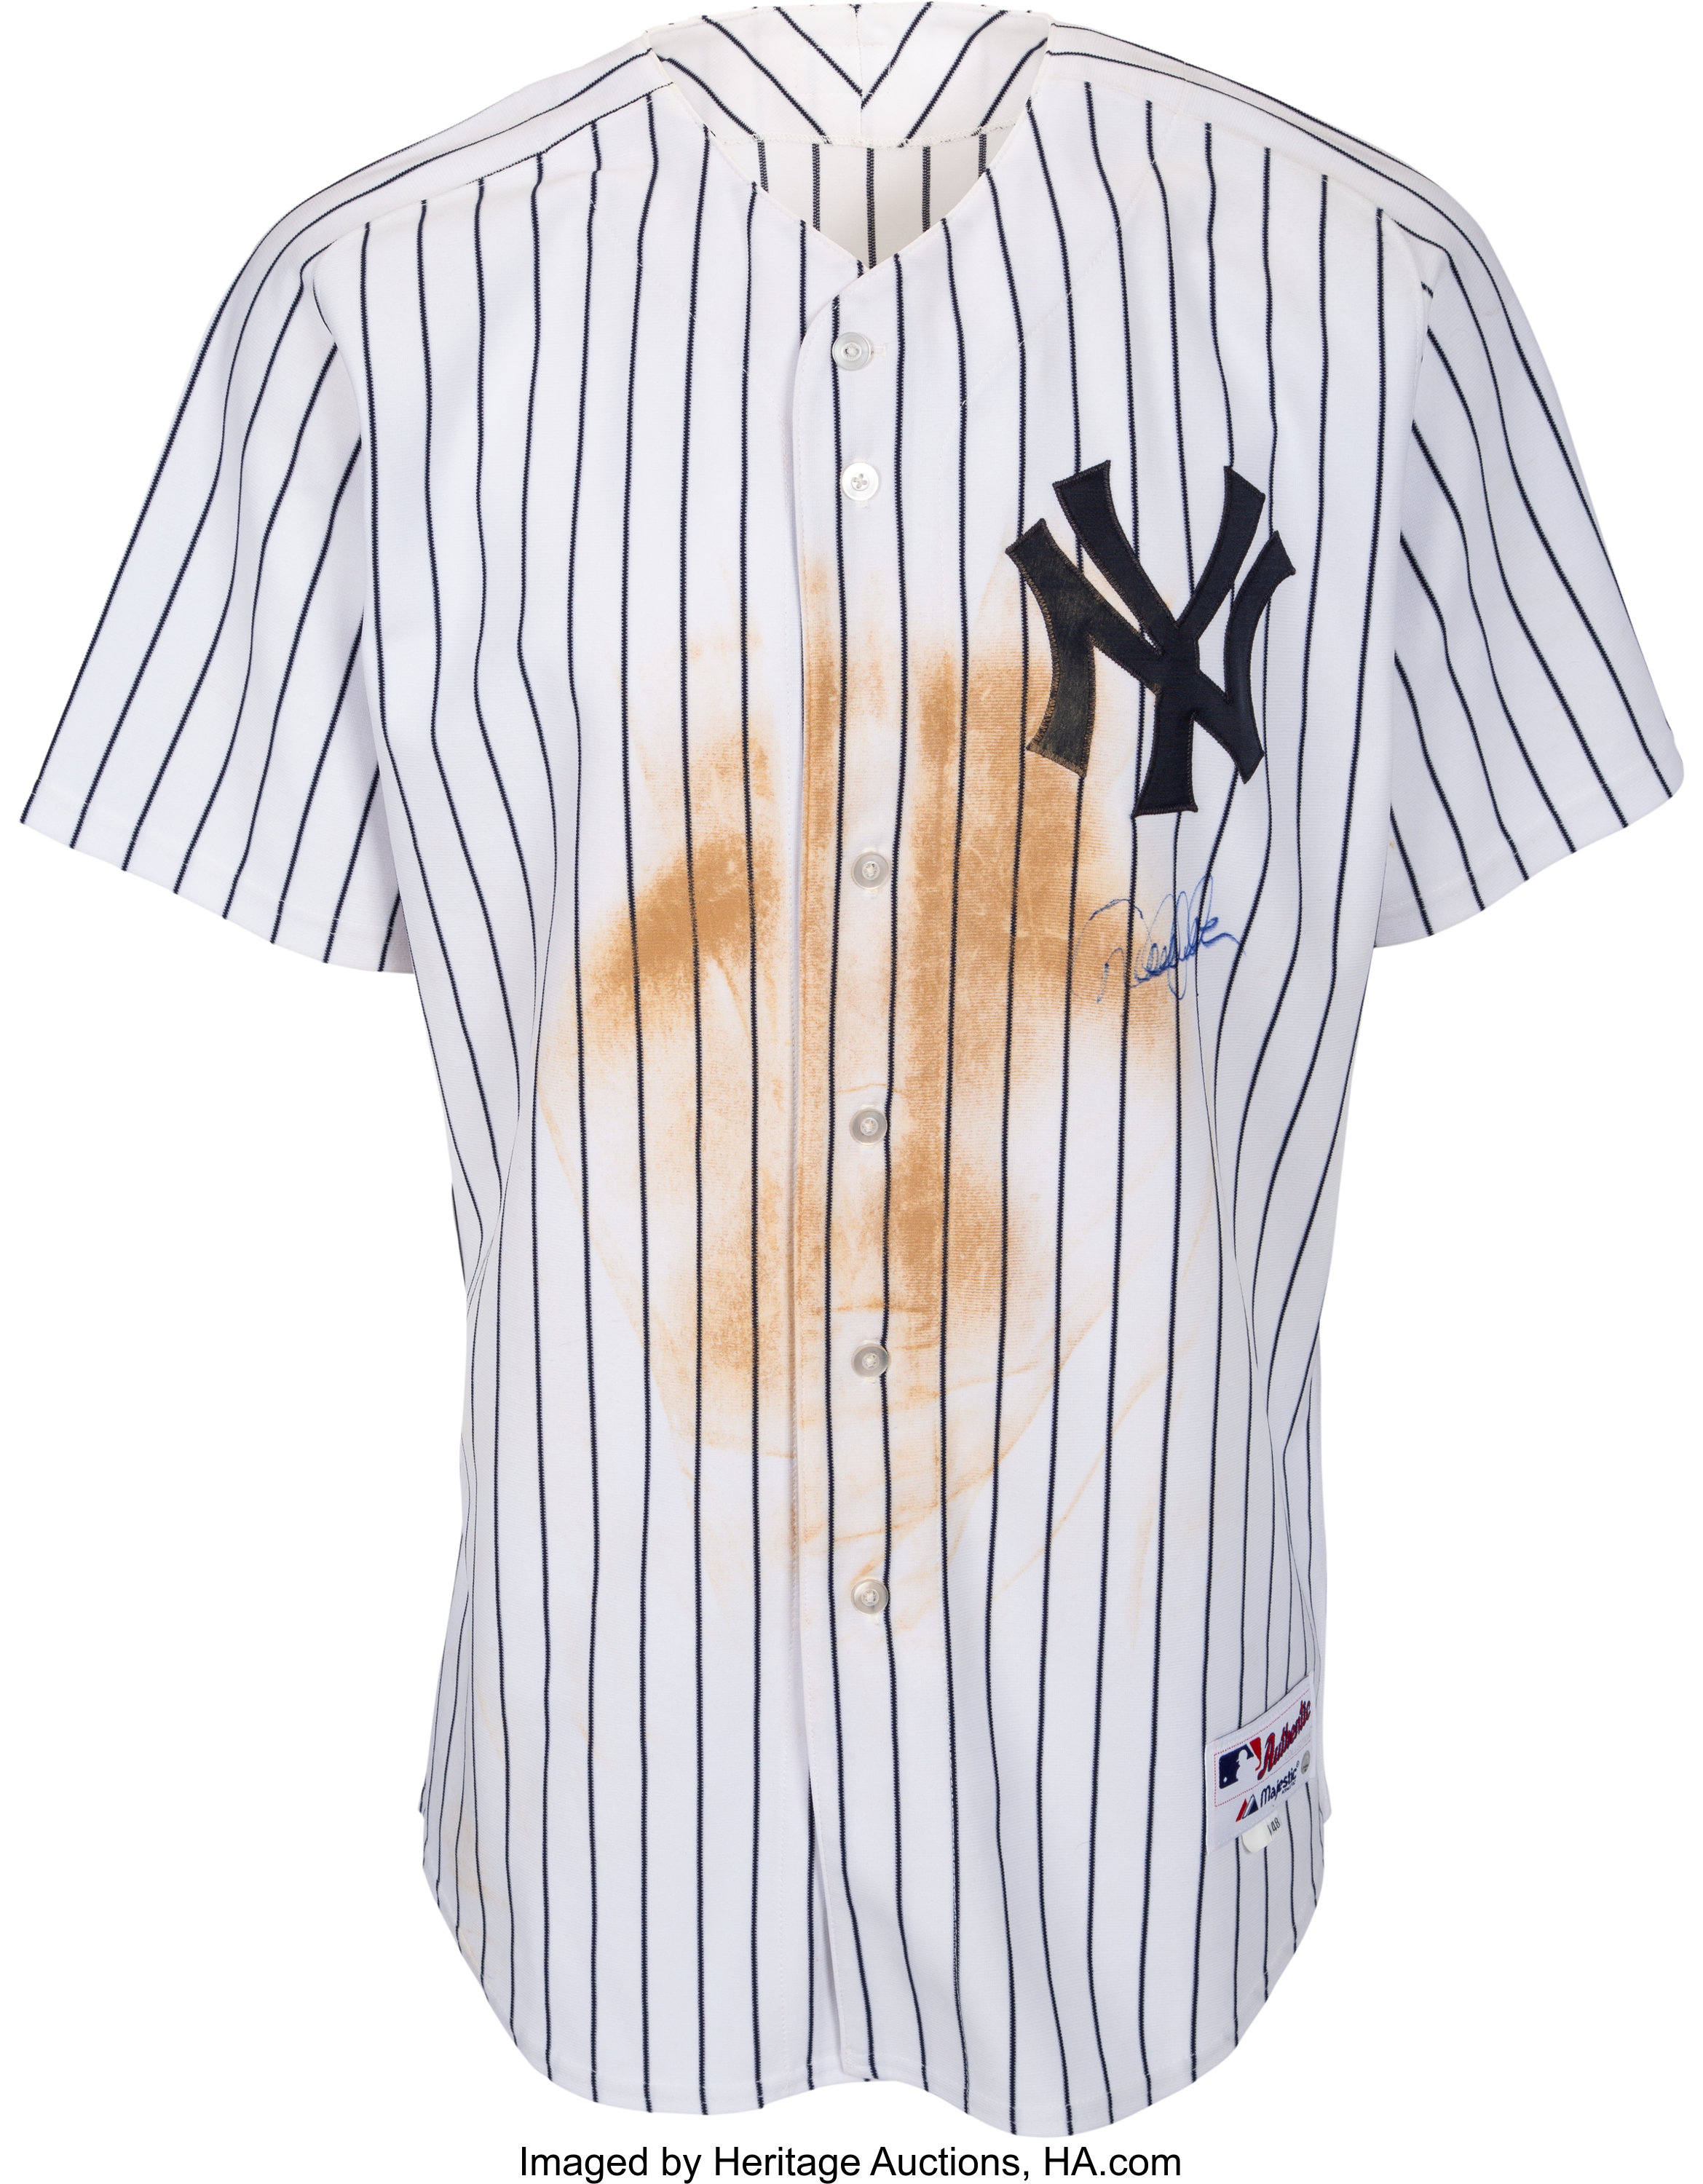 Mickey Mantle 1954 NY Yankees jersey hits $575K at auction